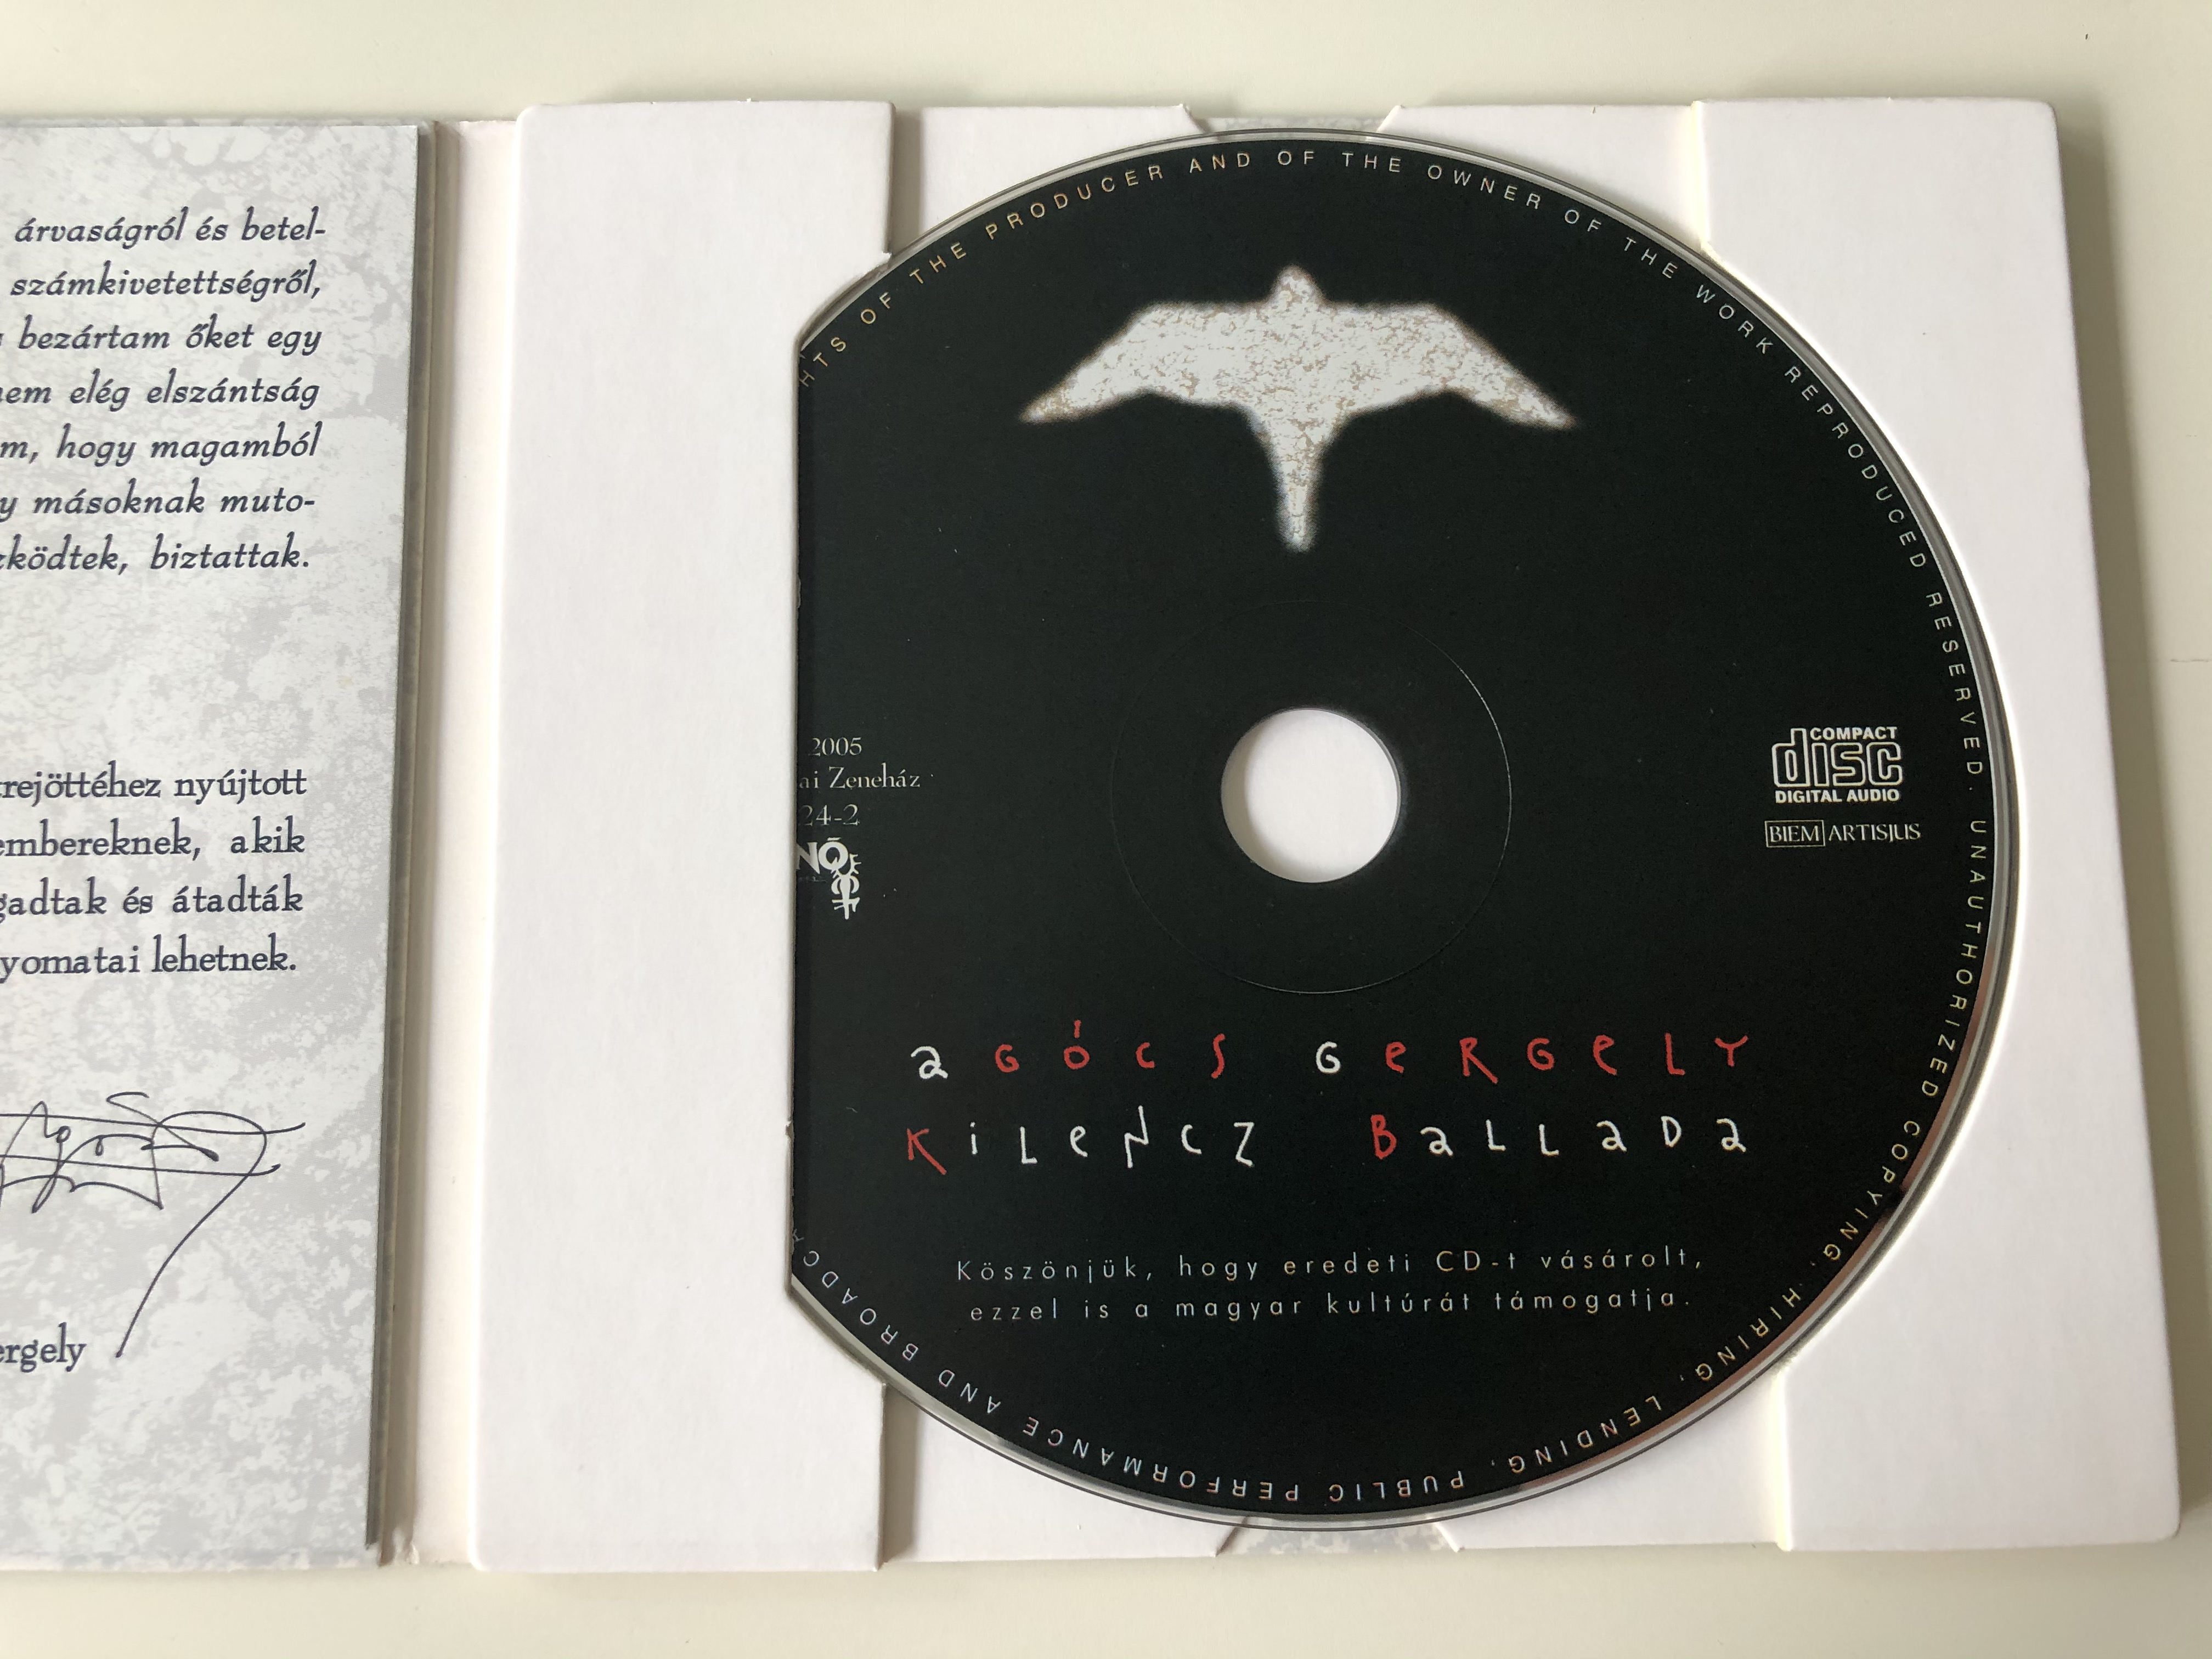 ag-cs-gergely-kilencz-ballada-fon-records-audio-cd-2005-fa224-2-4-.jpg